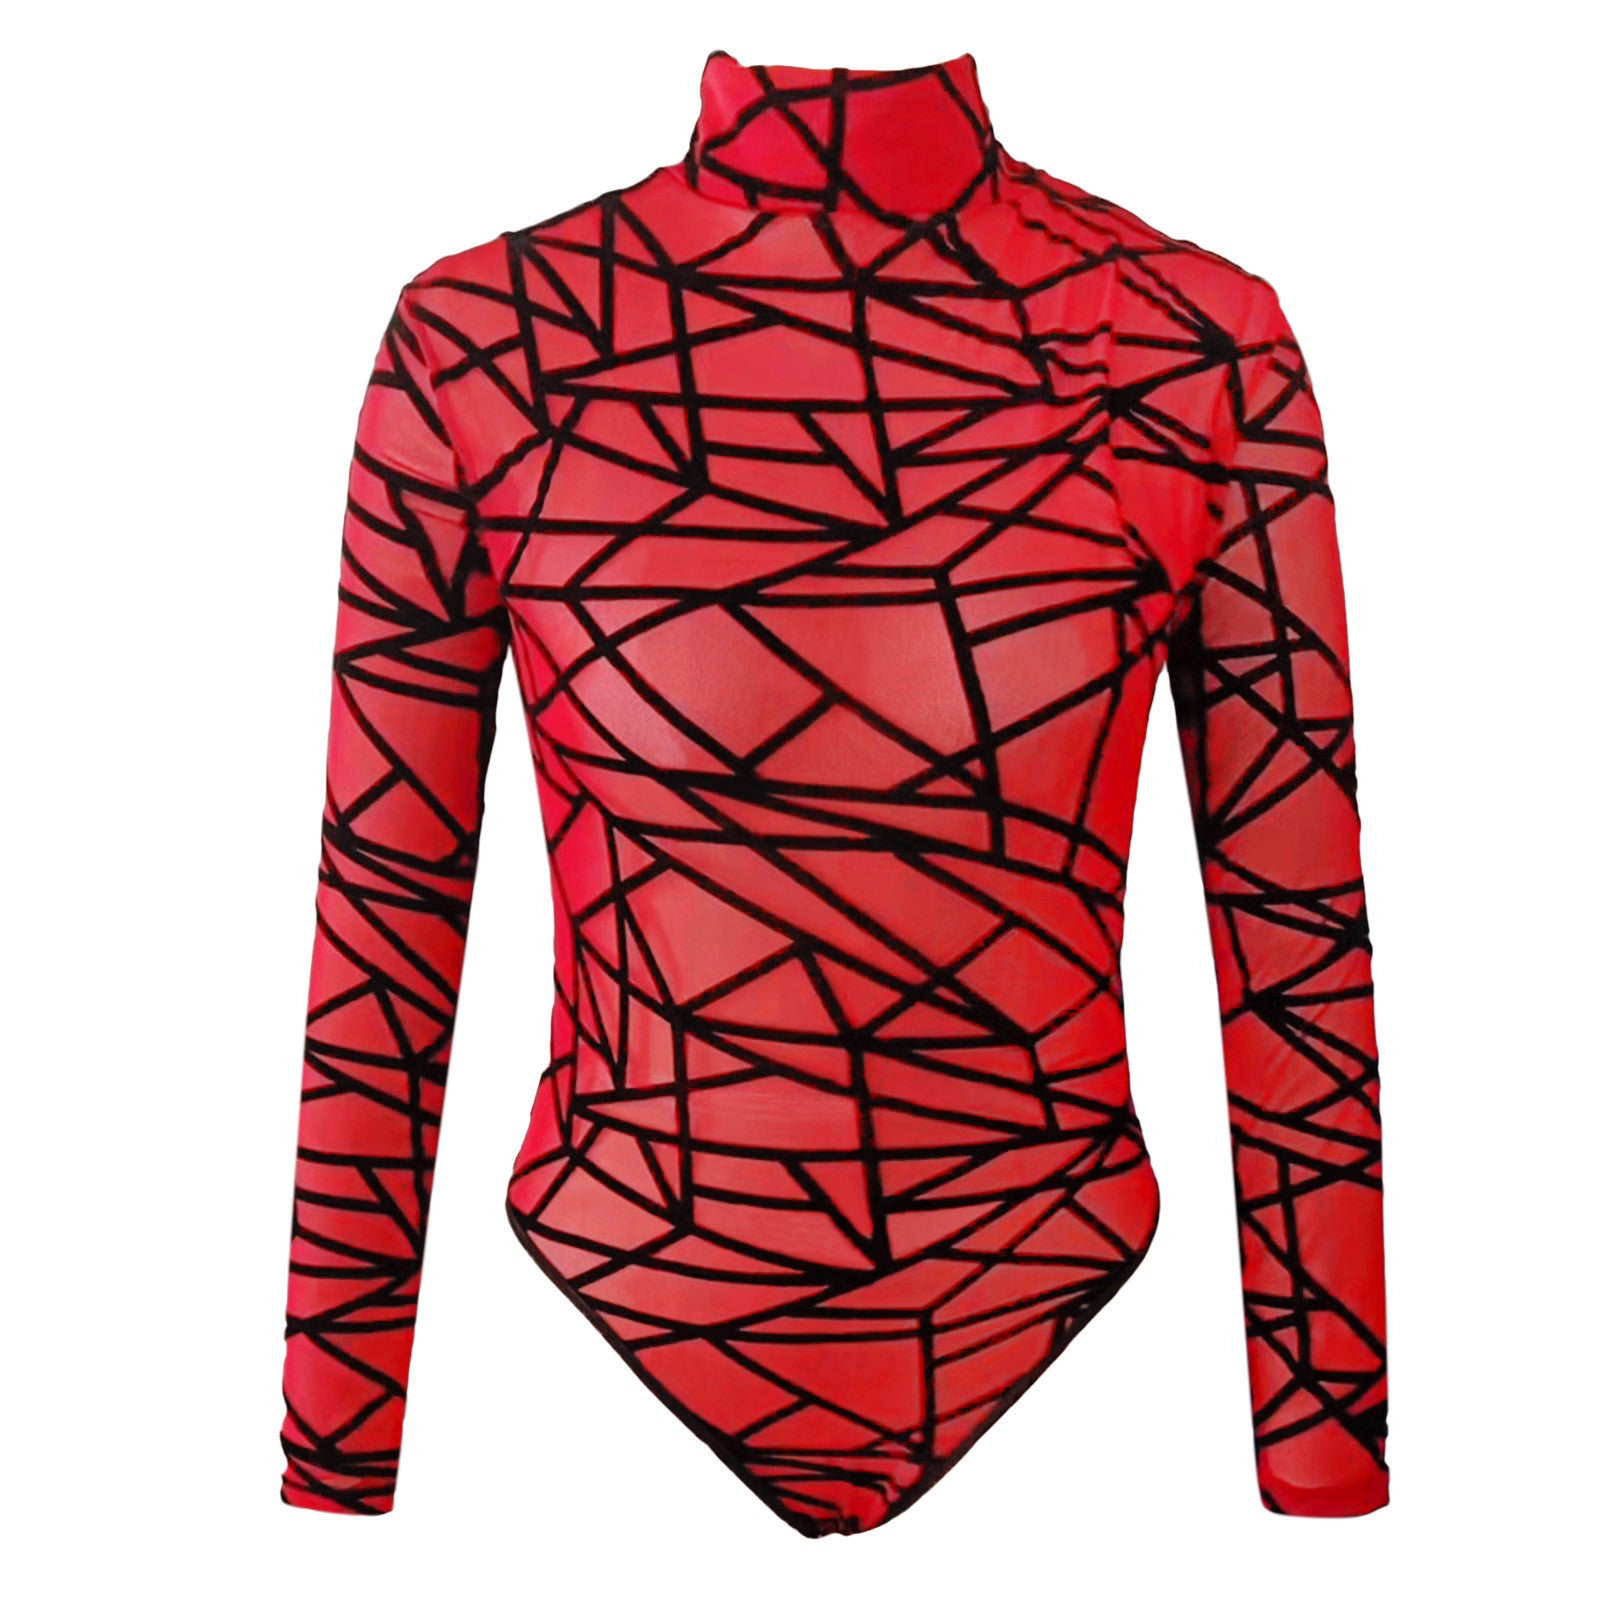 Geometric Print Bodysuit - Red & Black Sheer Geometric Print